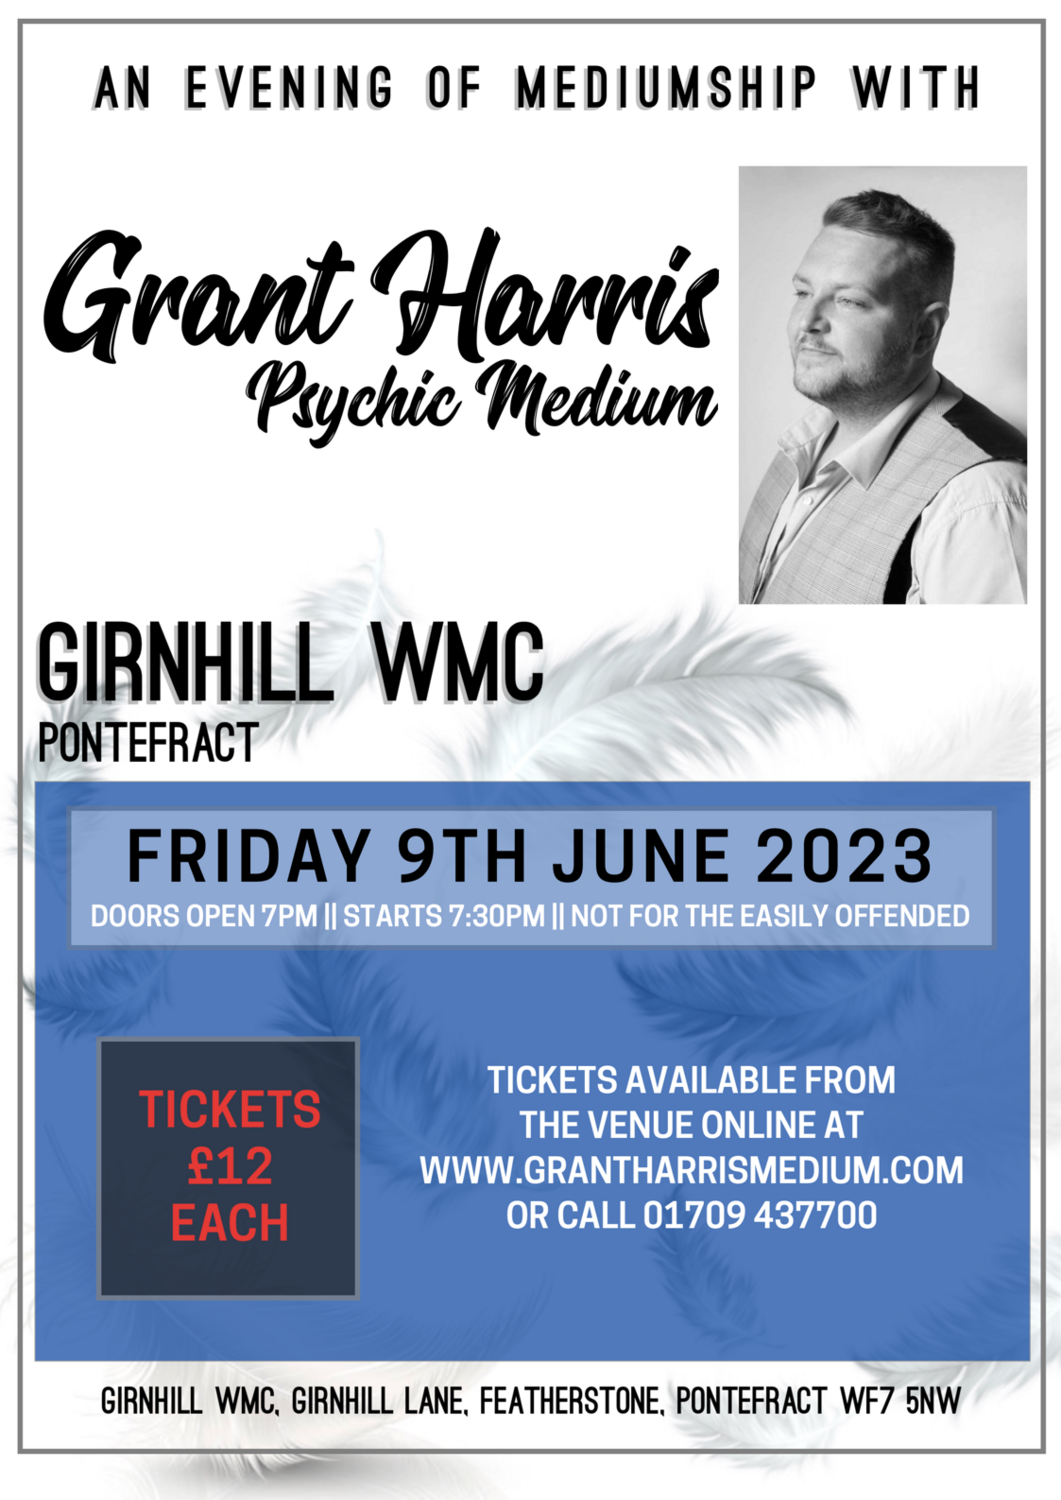 Girnhill WMC, Featherstone Pontefract, Friday 9th June 2023